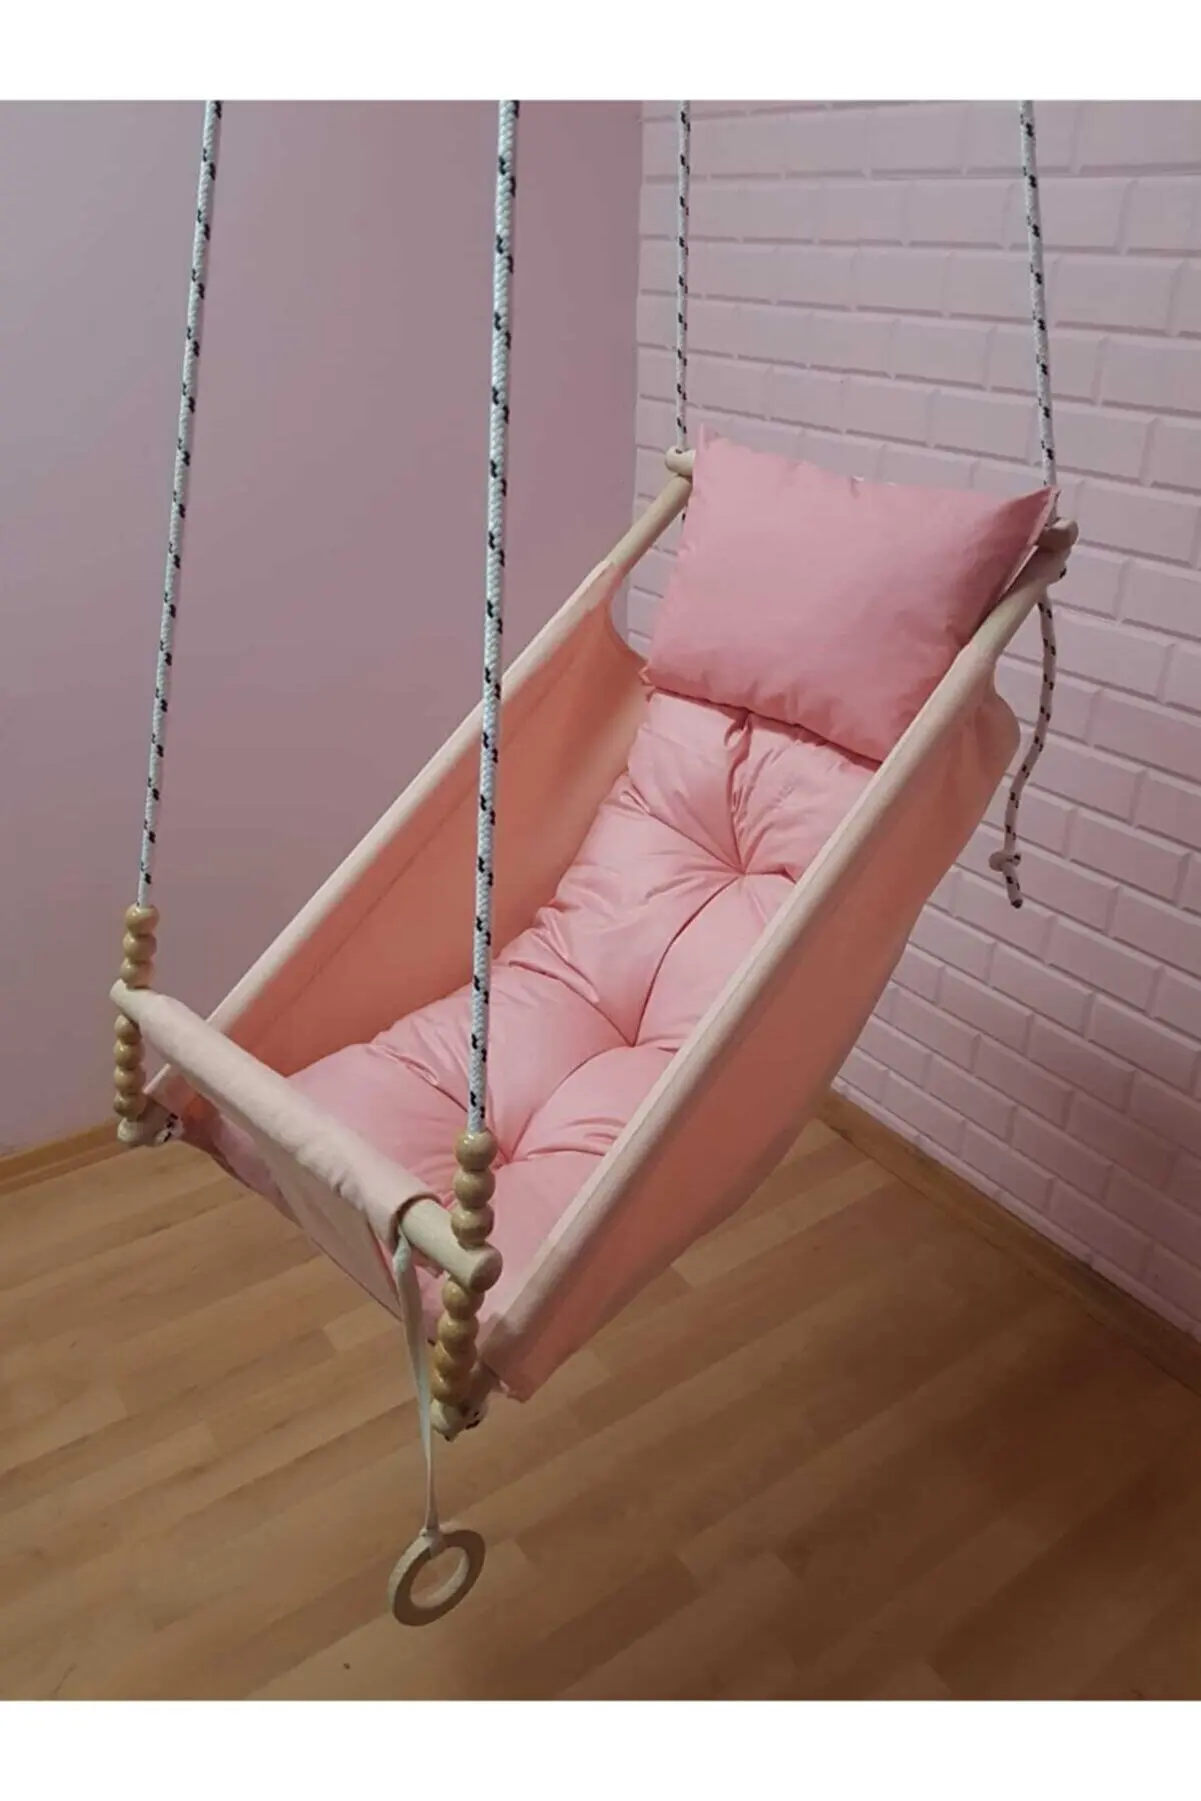 Baby Swing Play Activity Children Hammock Fun Hanging Boys Girls Babies Kids Safe Toy Rocking Chair Canvas Seat Models 2022 AHF